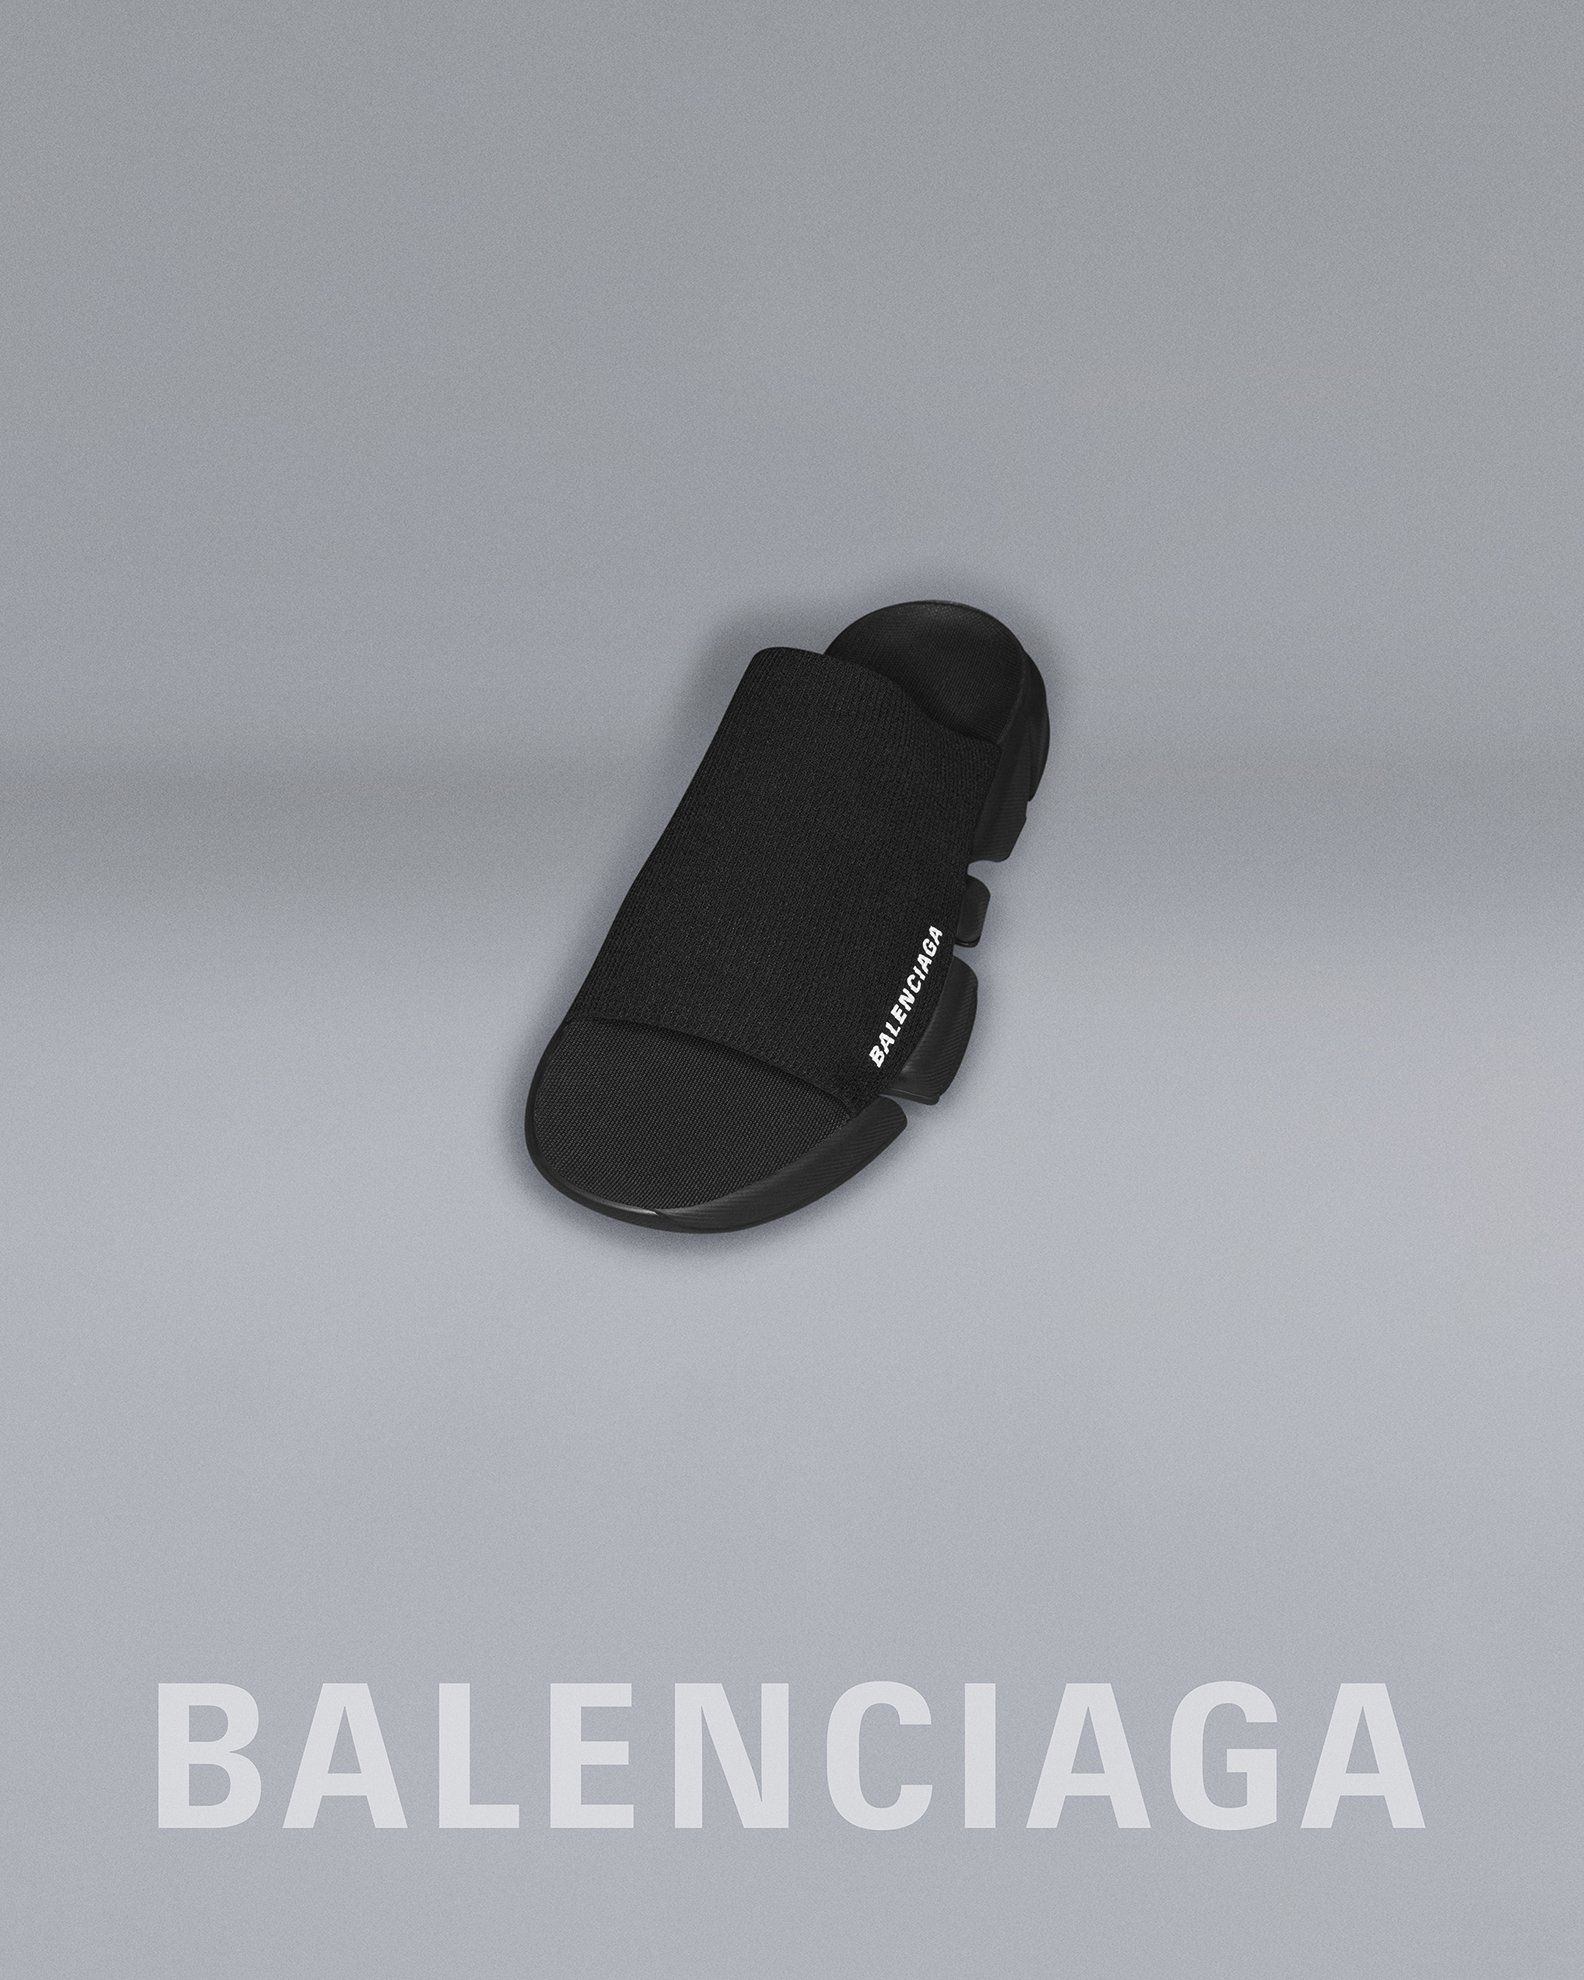 BALENCIAGA GARDE-ROBE 23 STILL LIFE IMAGE LOGO SLIDE.jpg